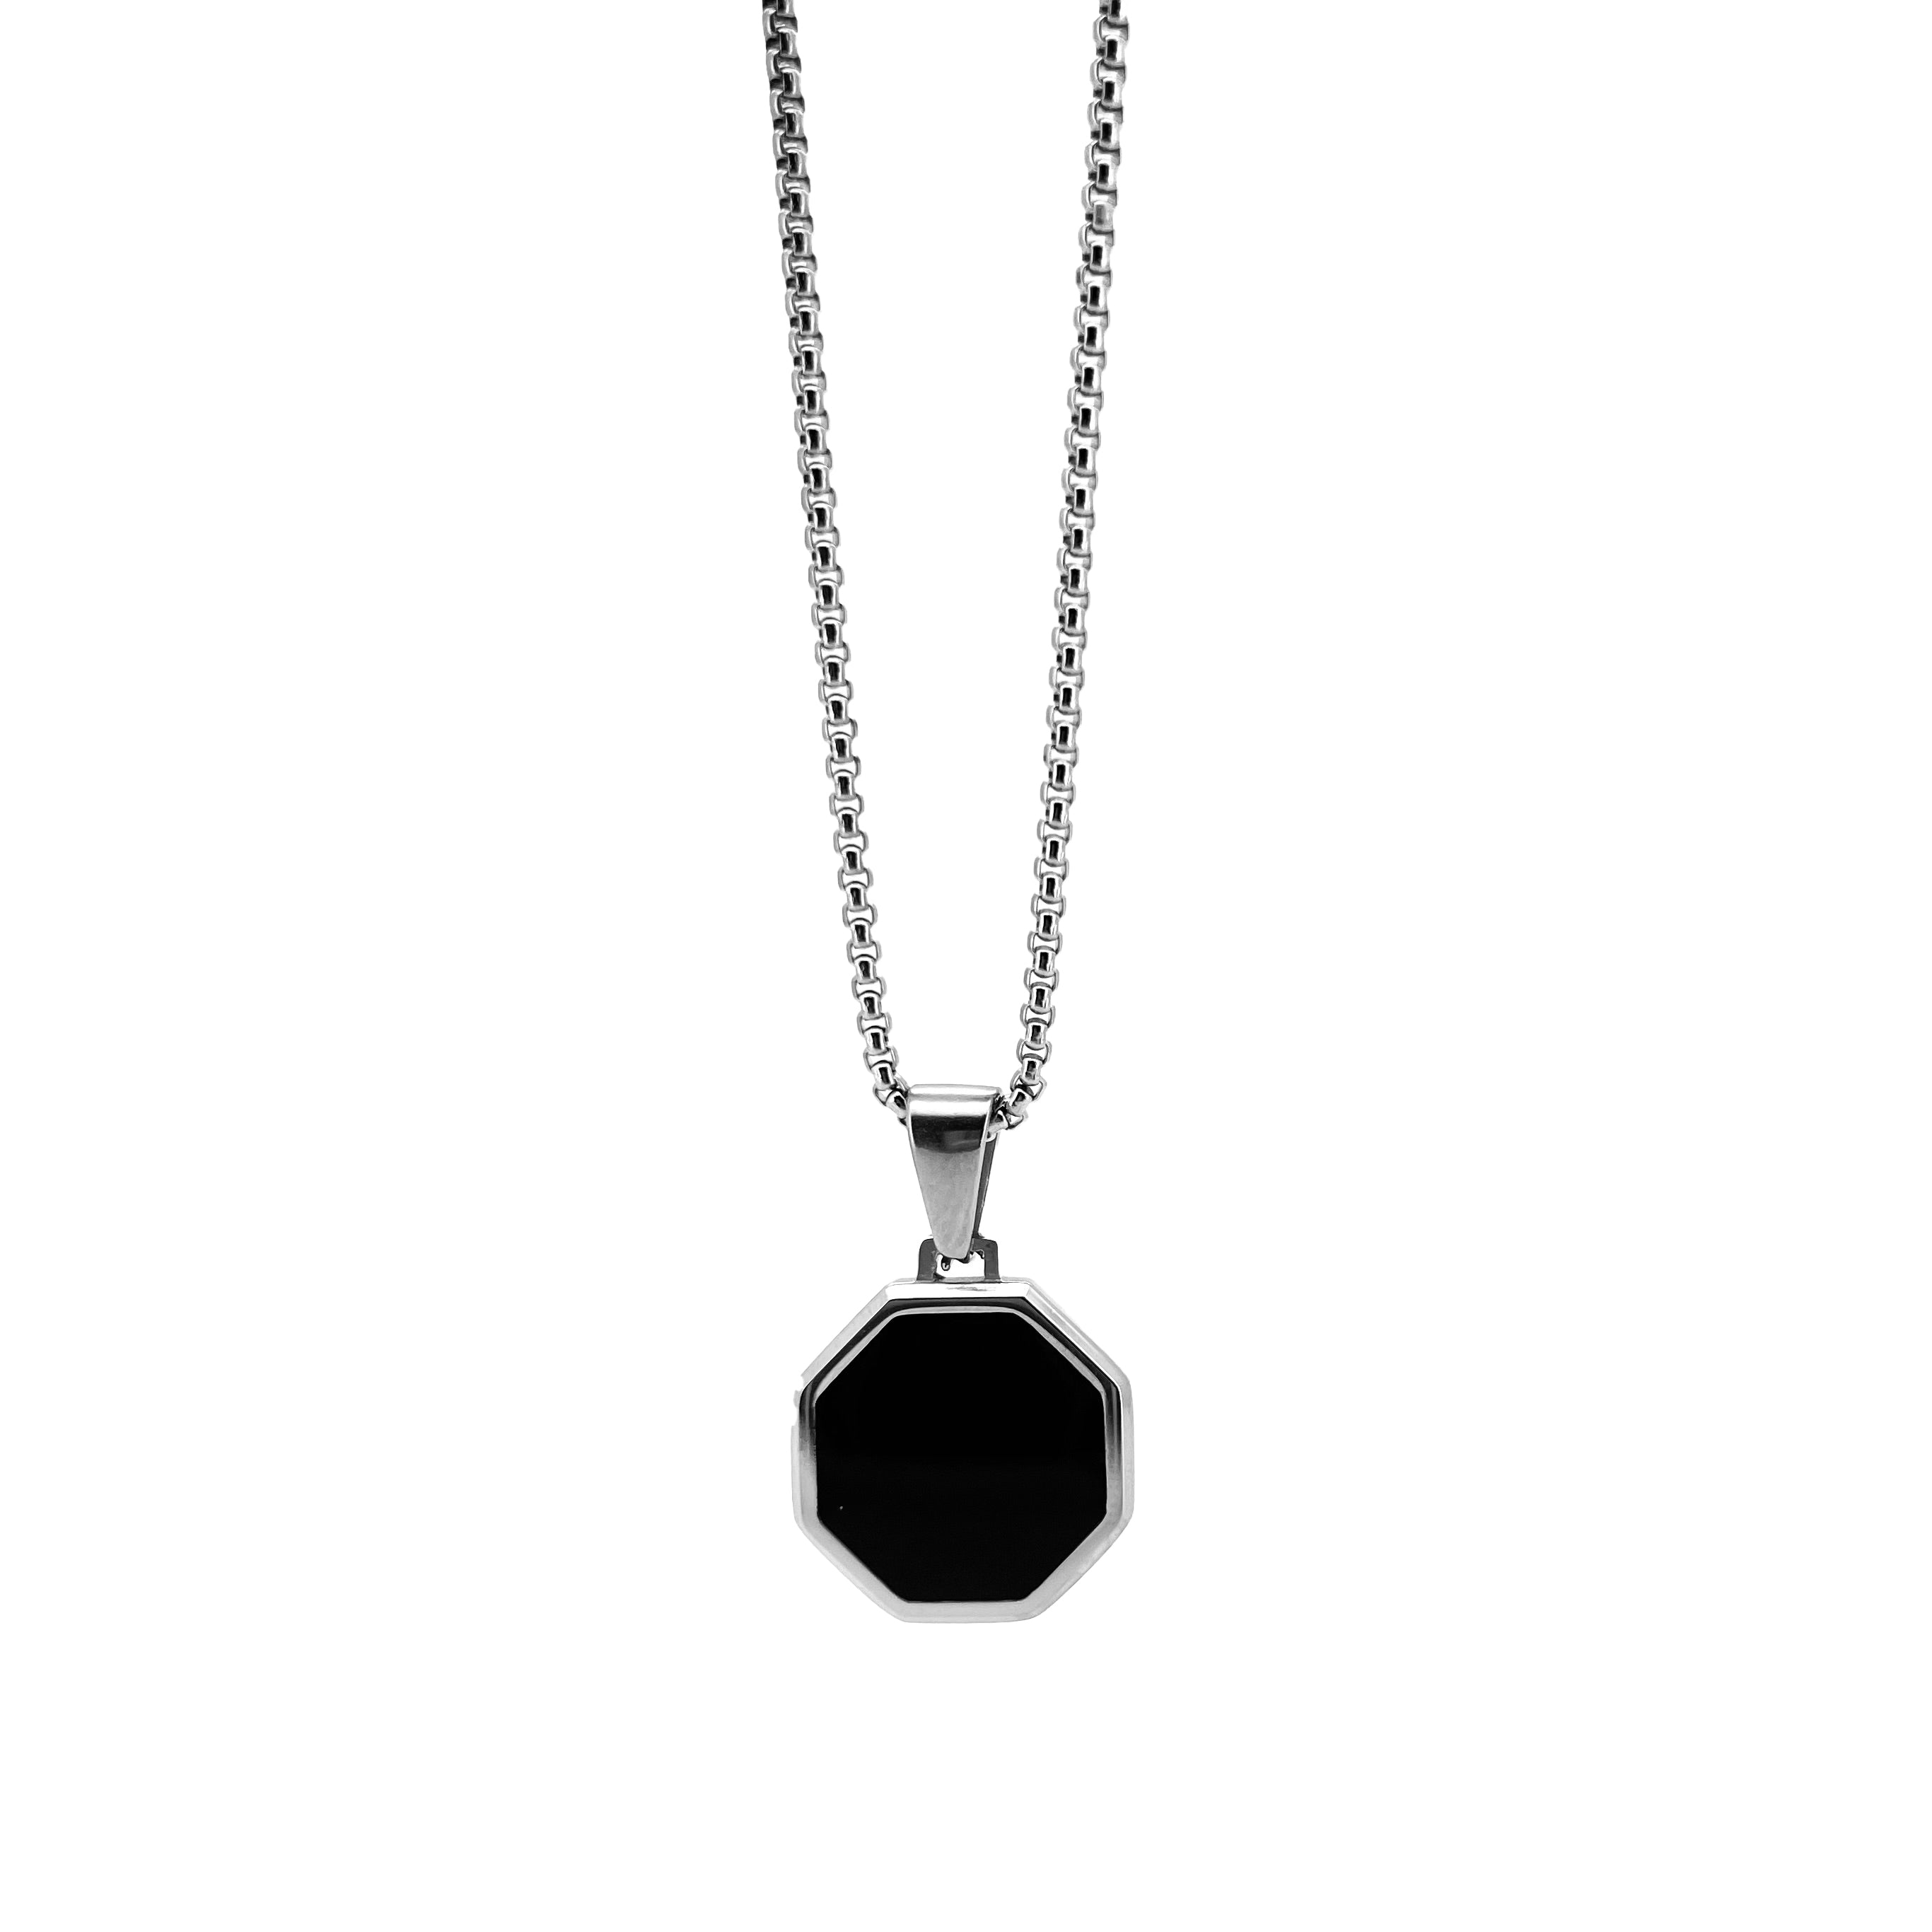 Hernando Stainless Steel Chain with Geometric Black Enamel Pendant